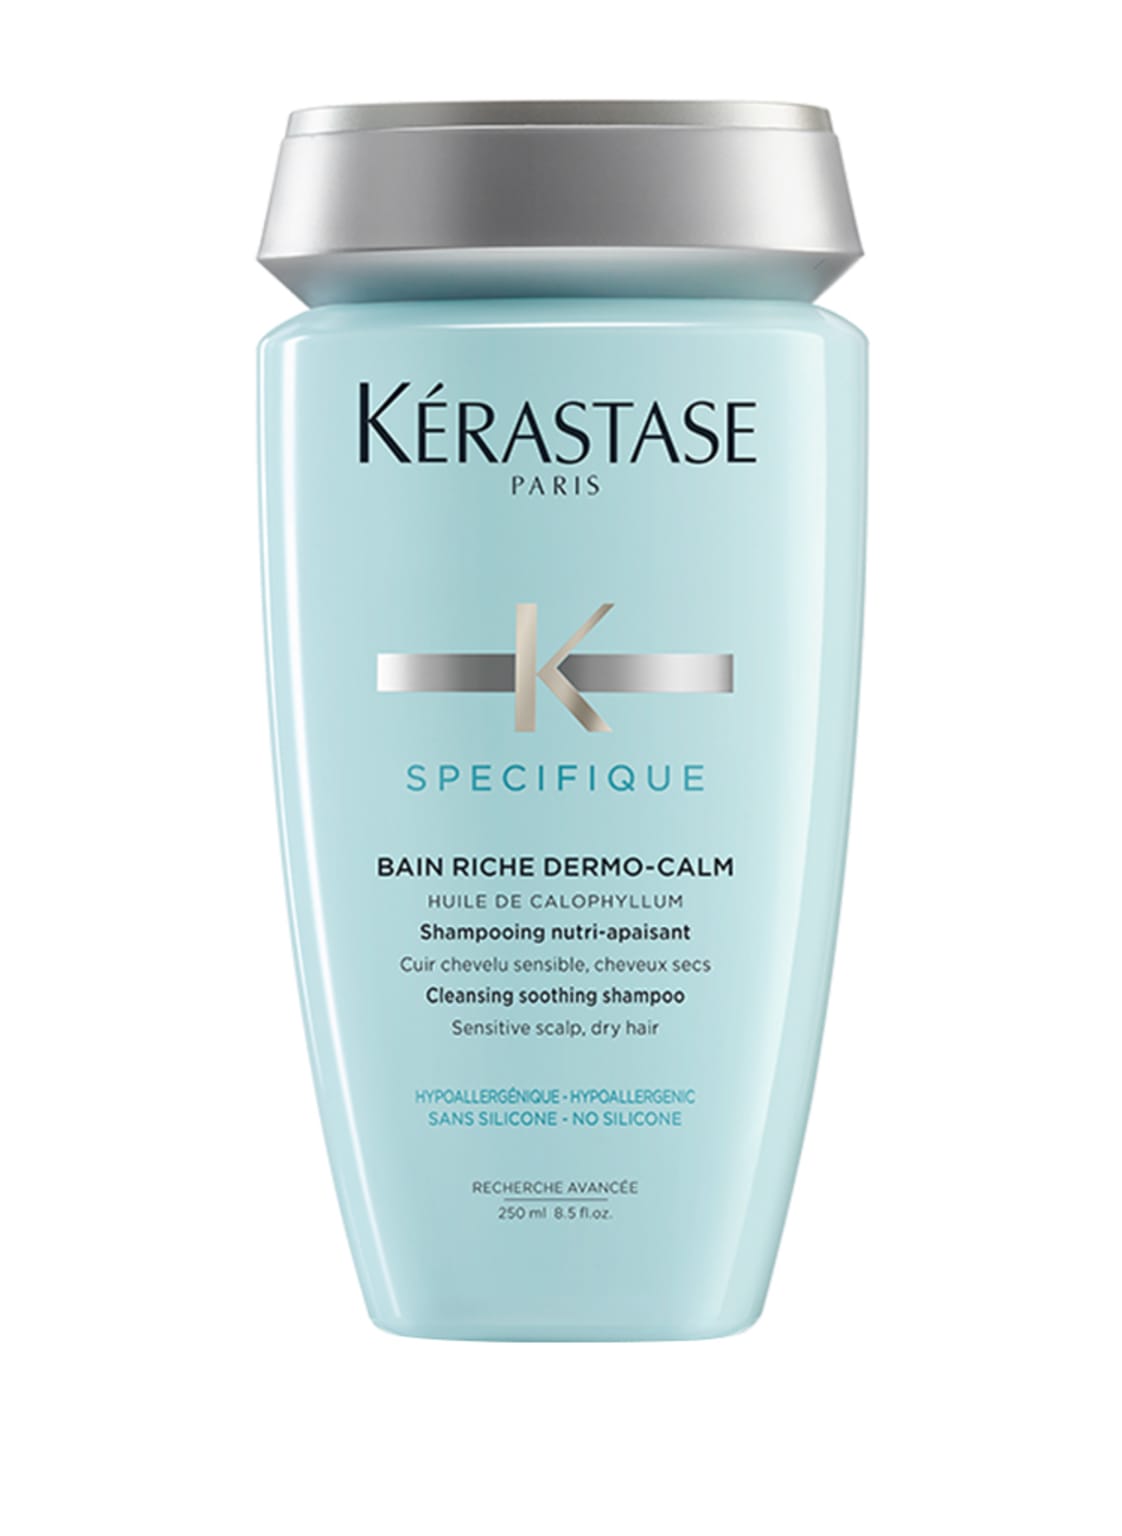 Kérastase Specifique Bain Riche Dermo-Calm Shampoo 250 ml von KÉRASTASE